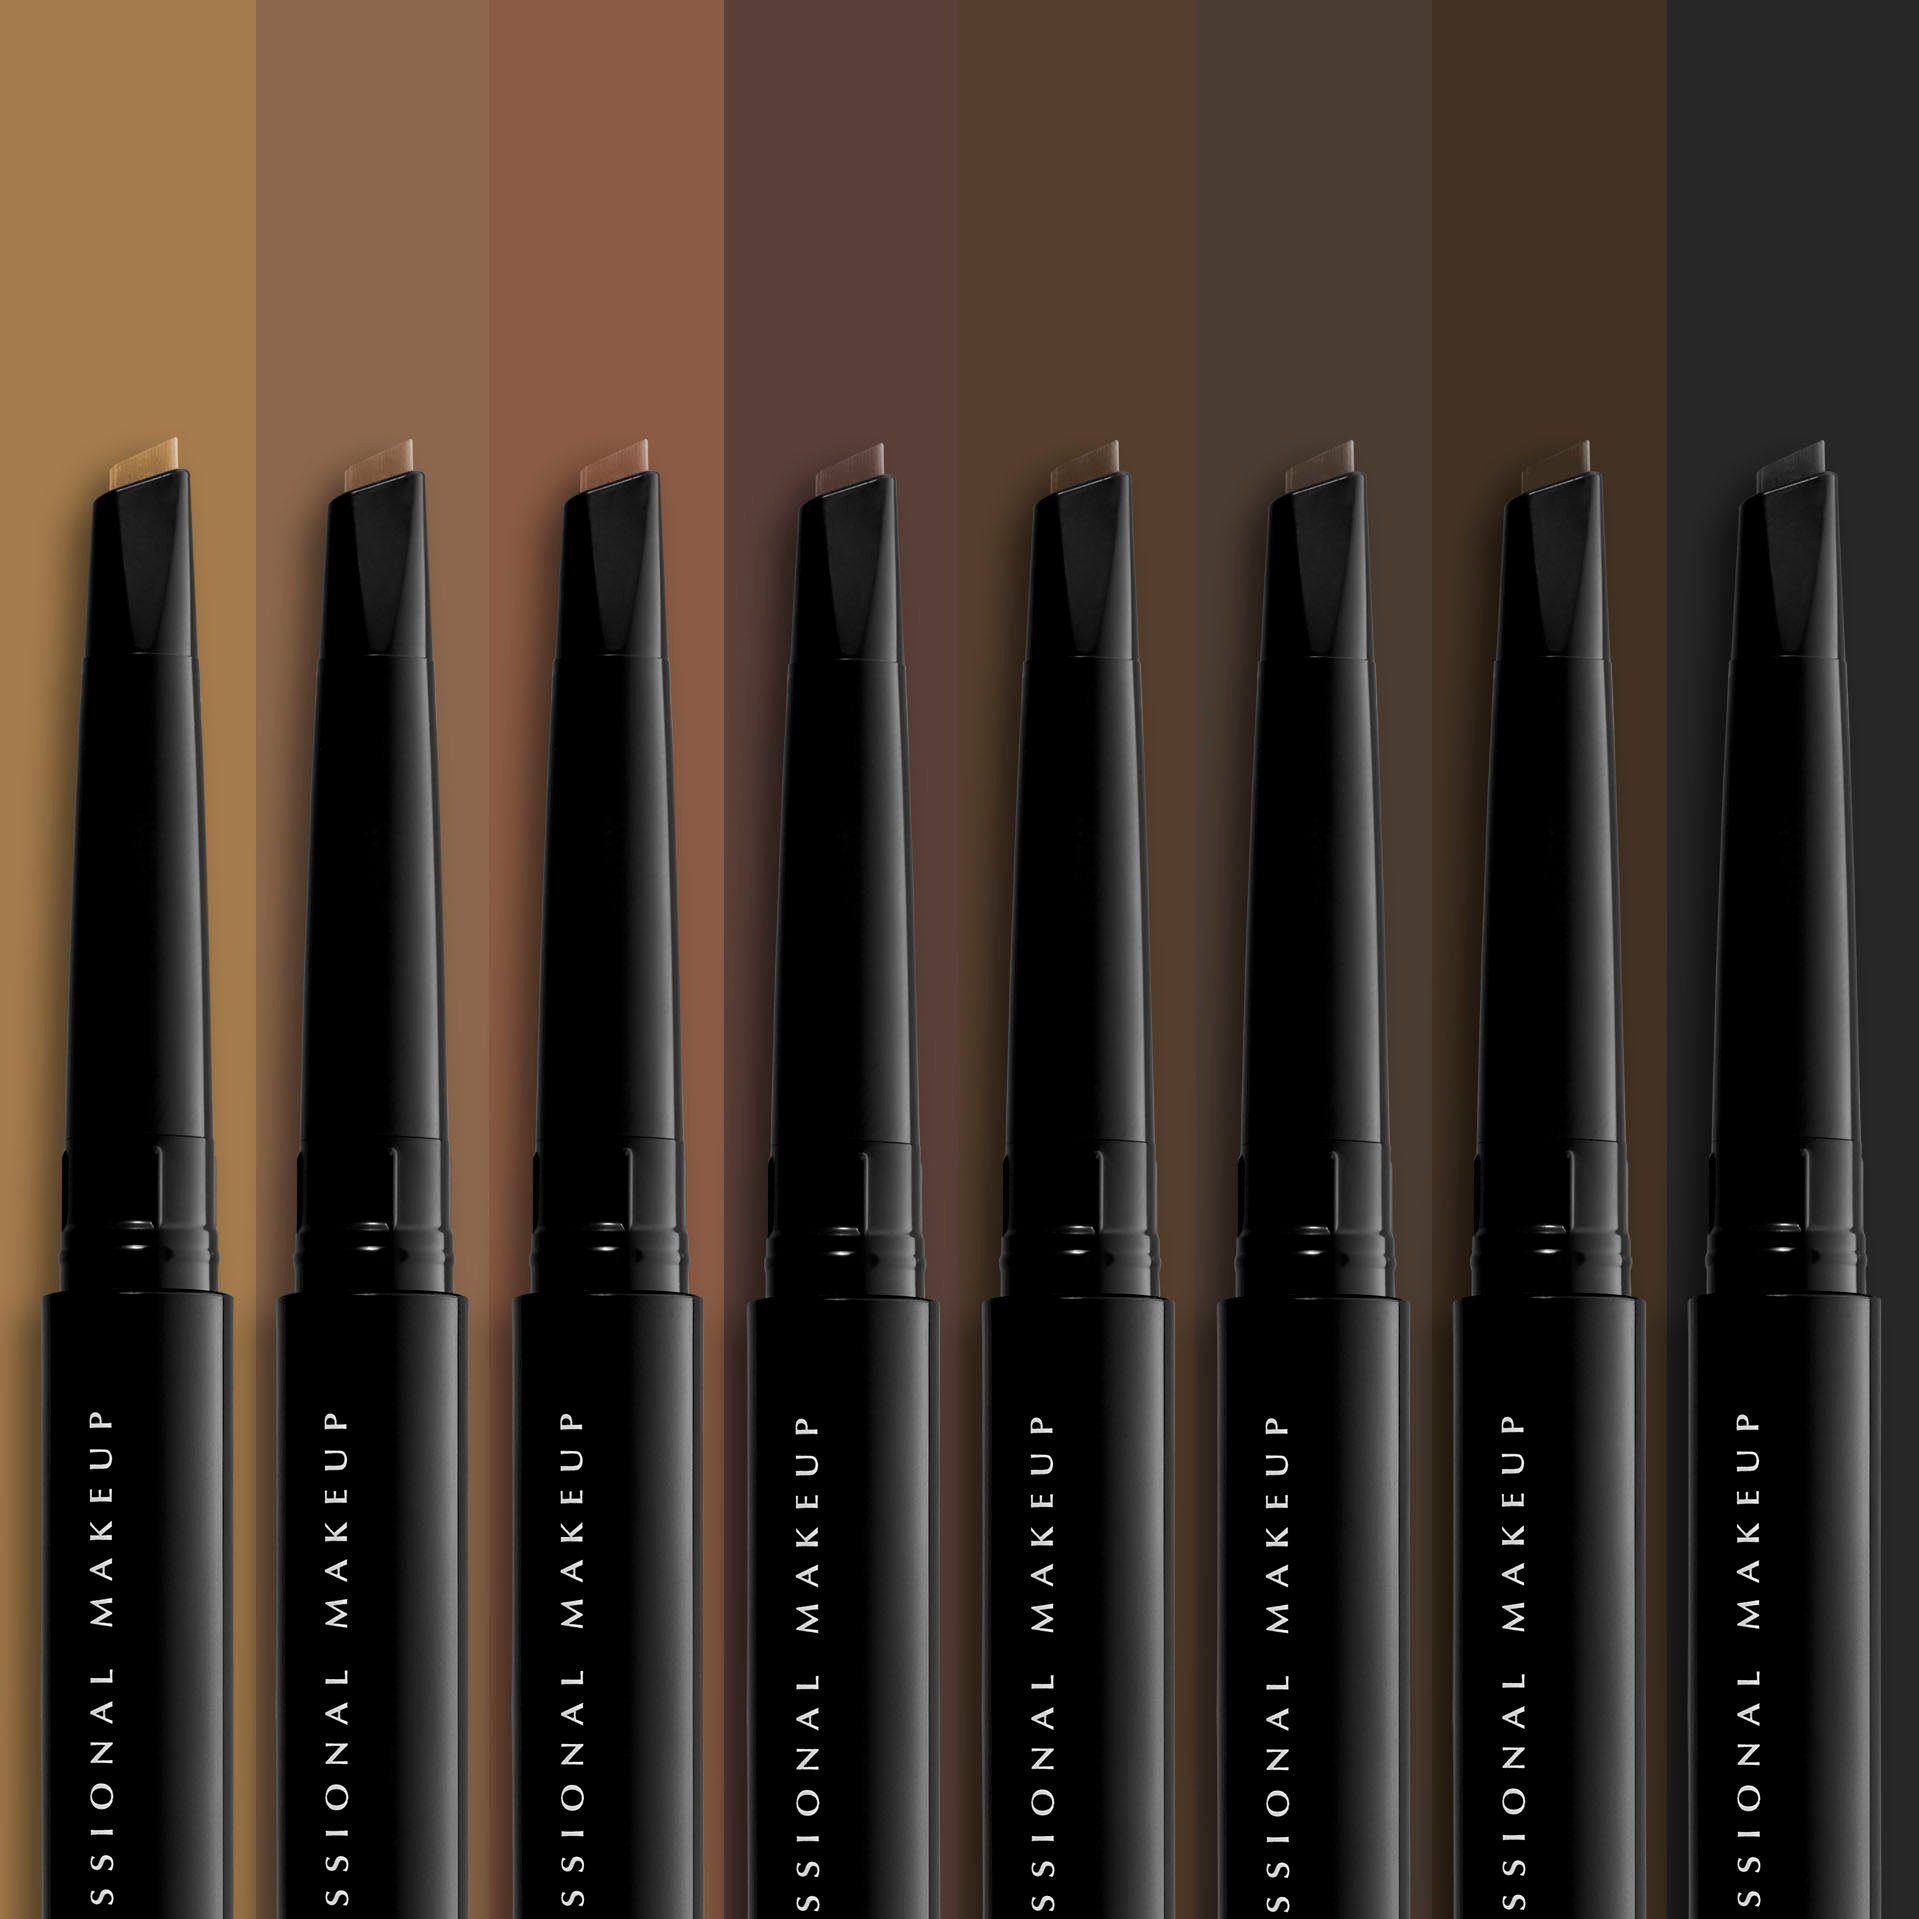 NYX Professional Eyebrow Fill brown Pencil & Augenbrauen-Stift Makeup Fluff ash Pomade